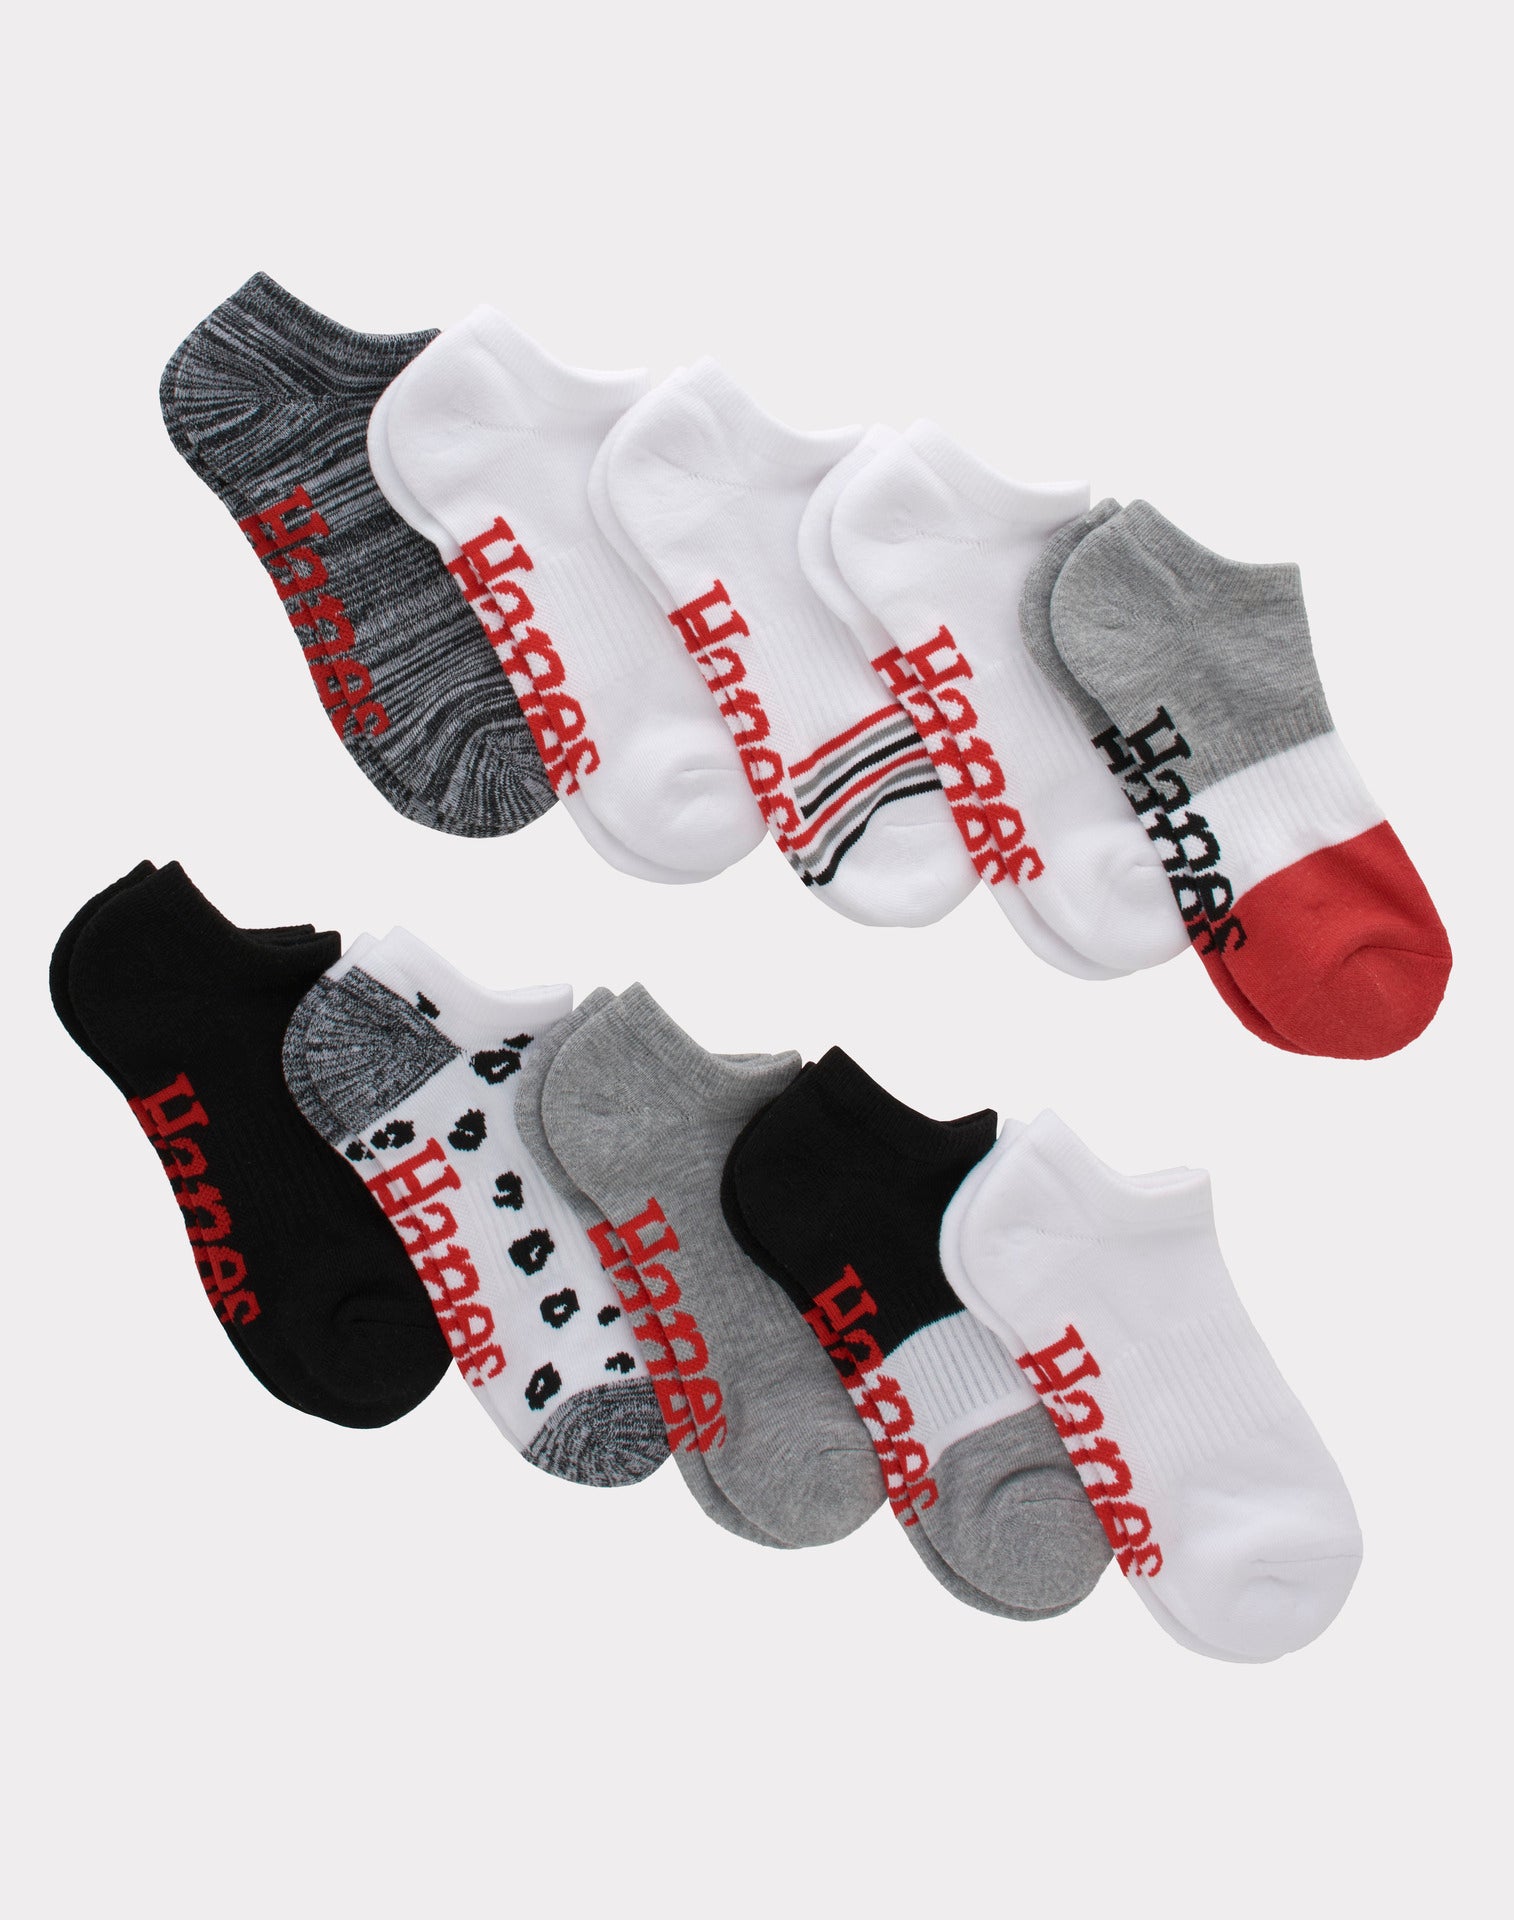 10-pair pack of moisture-wicking socks